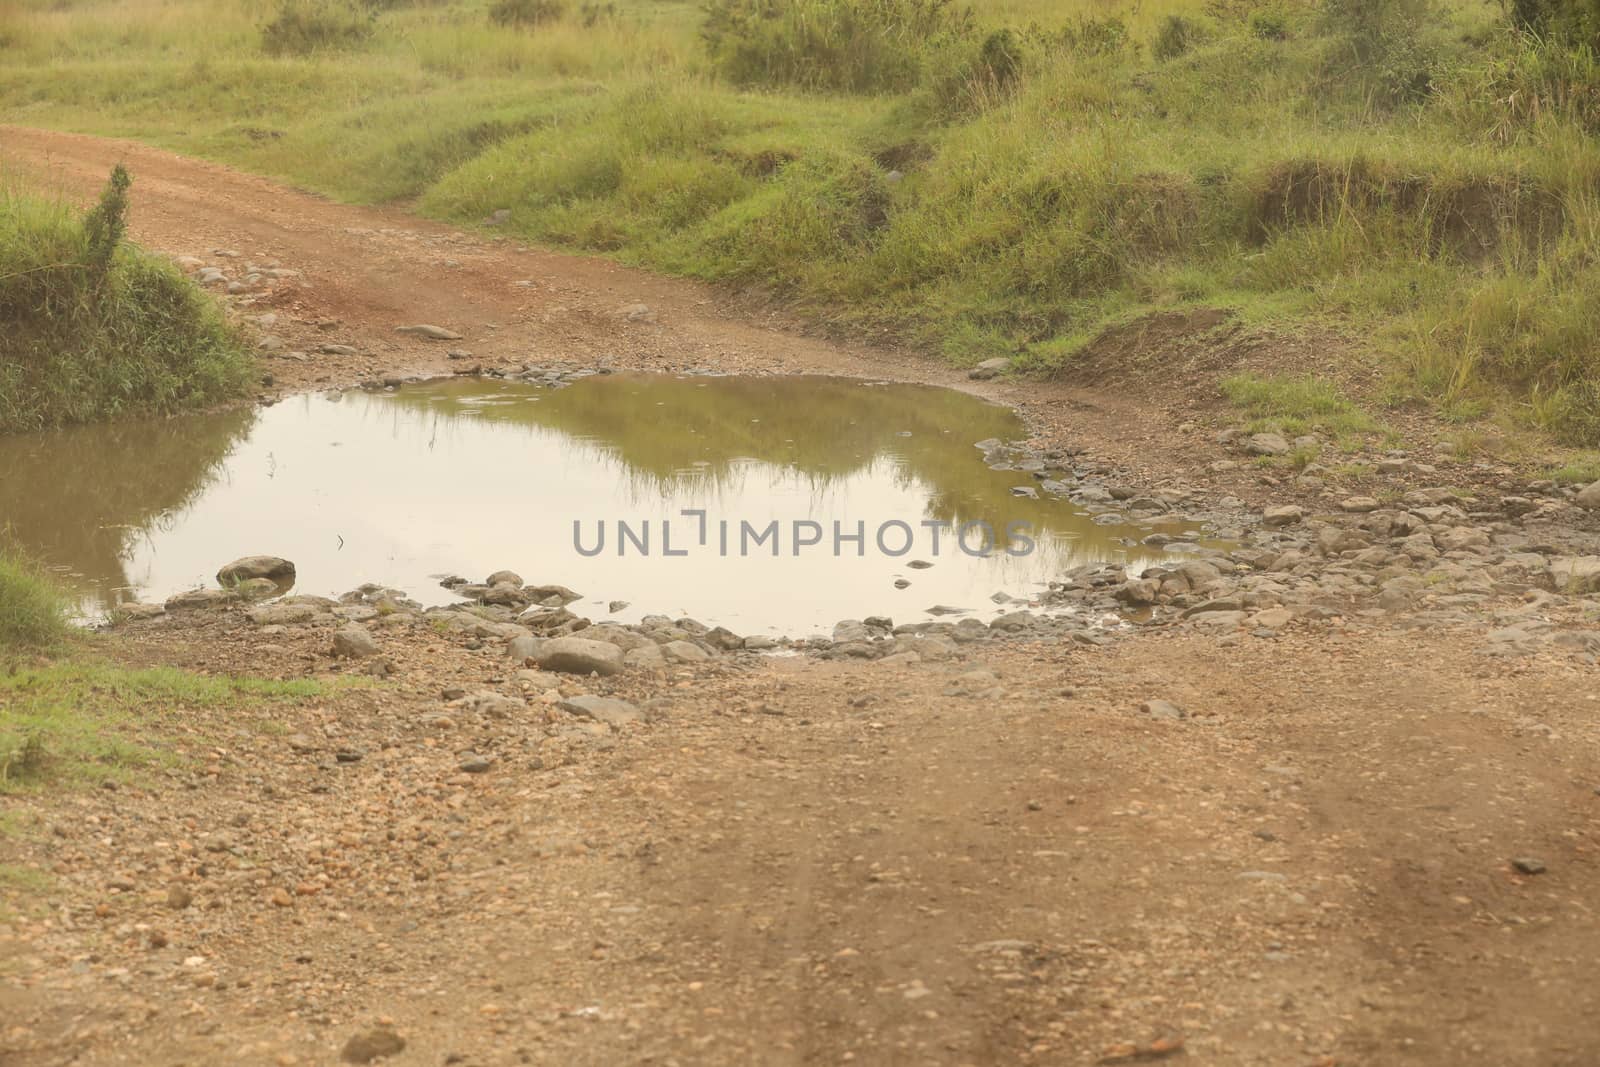 Damaged Rural Road Texture Masai Mara Kenya Africa